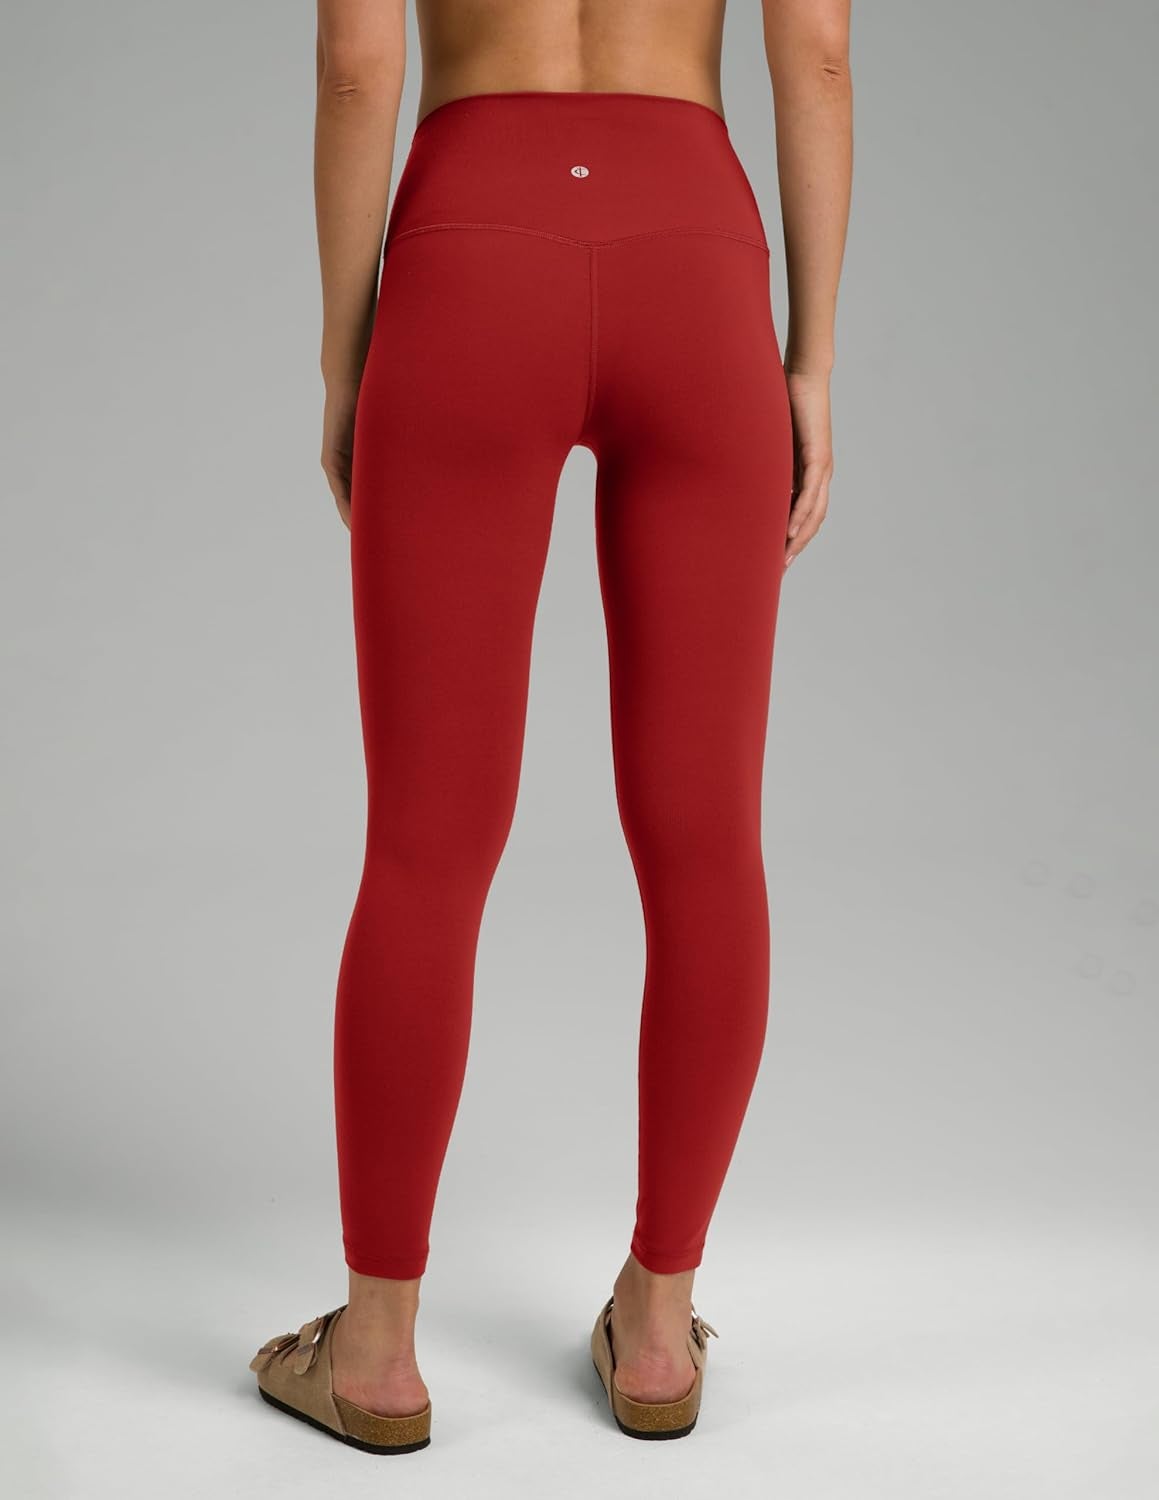 Buy SHAPERX Womens Girls High Waist Yoga/Gym Pants Active wear